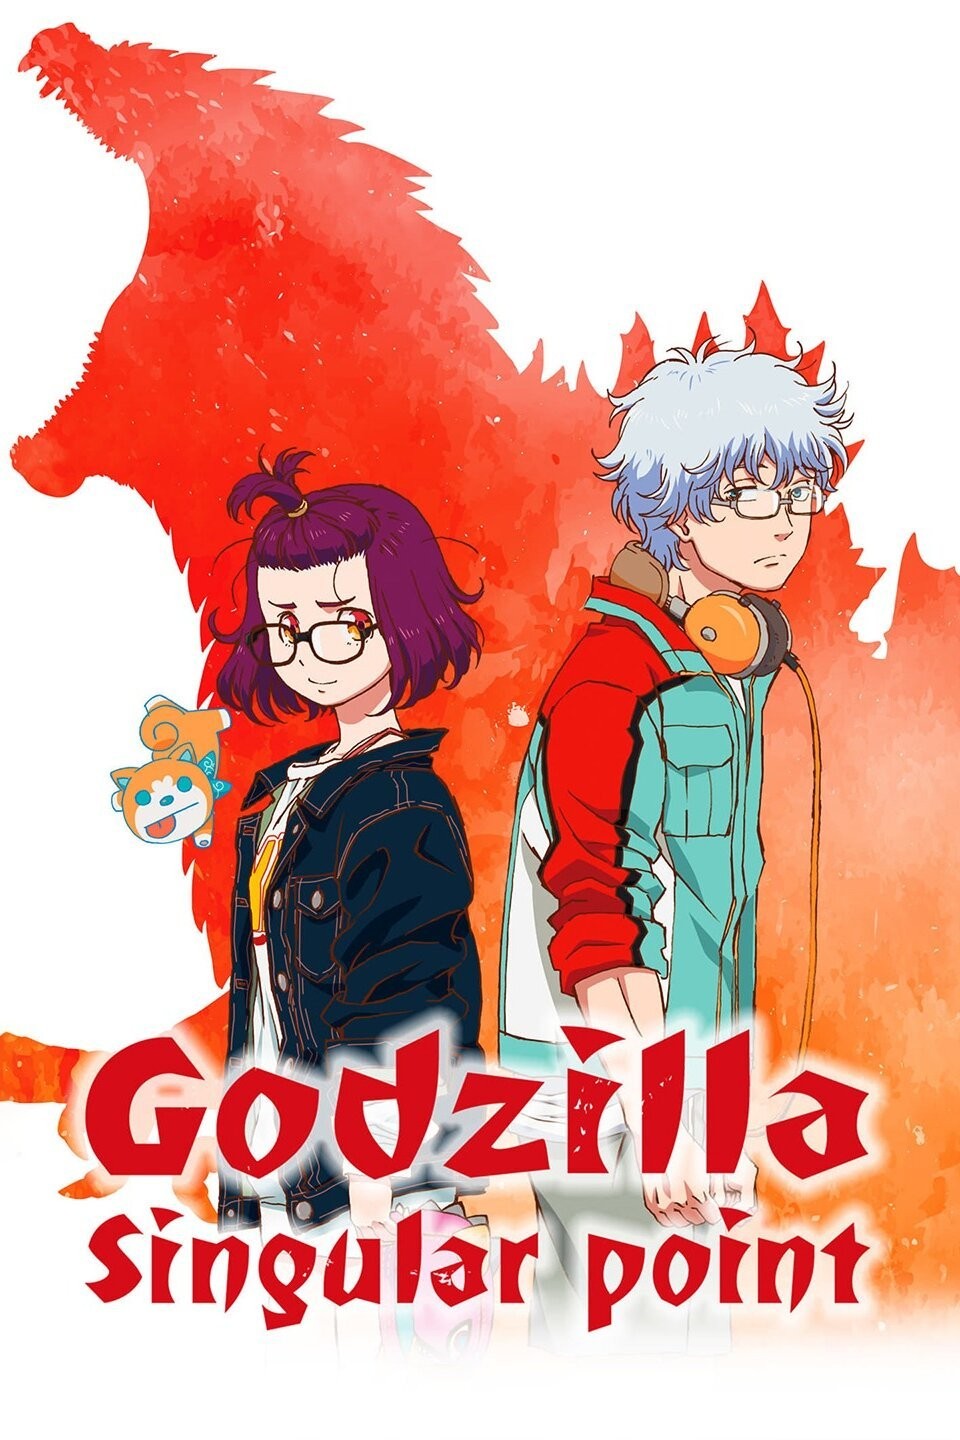 Godzilla Singular Point  Rotten Tomatoes